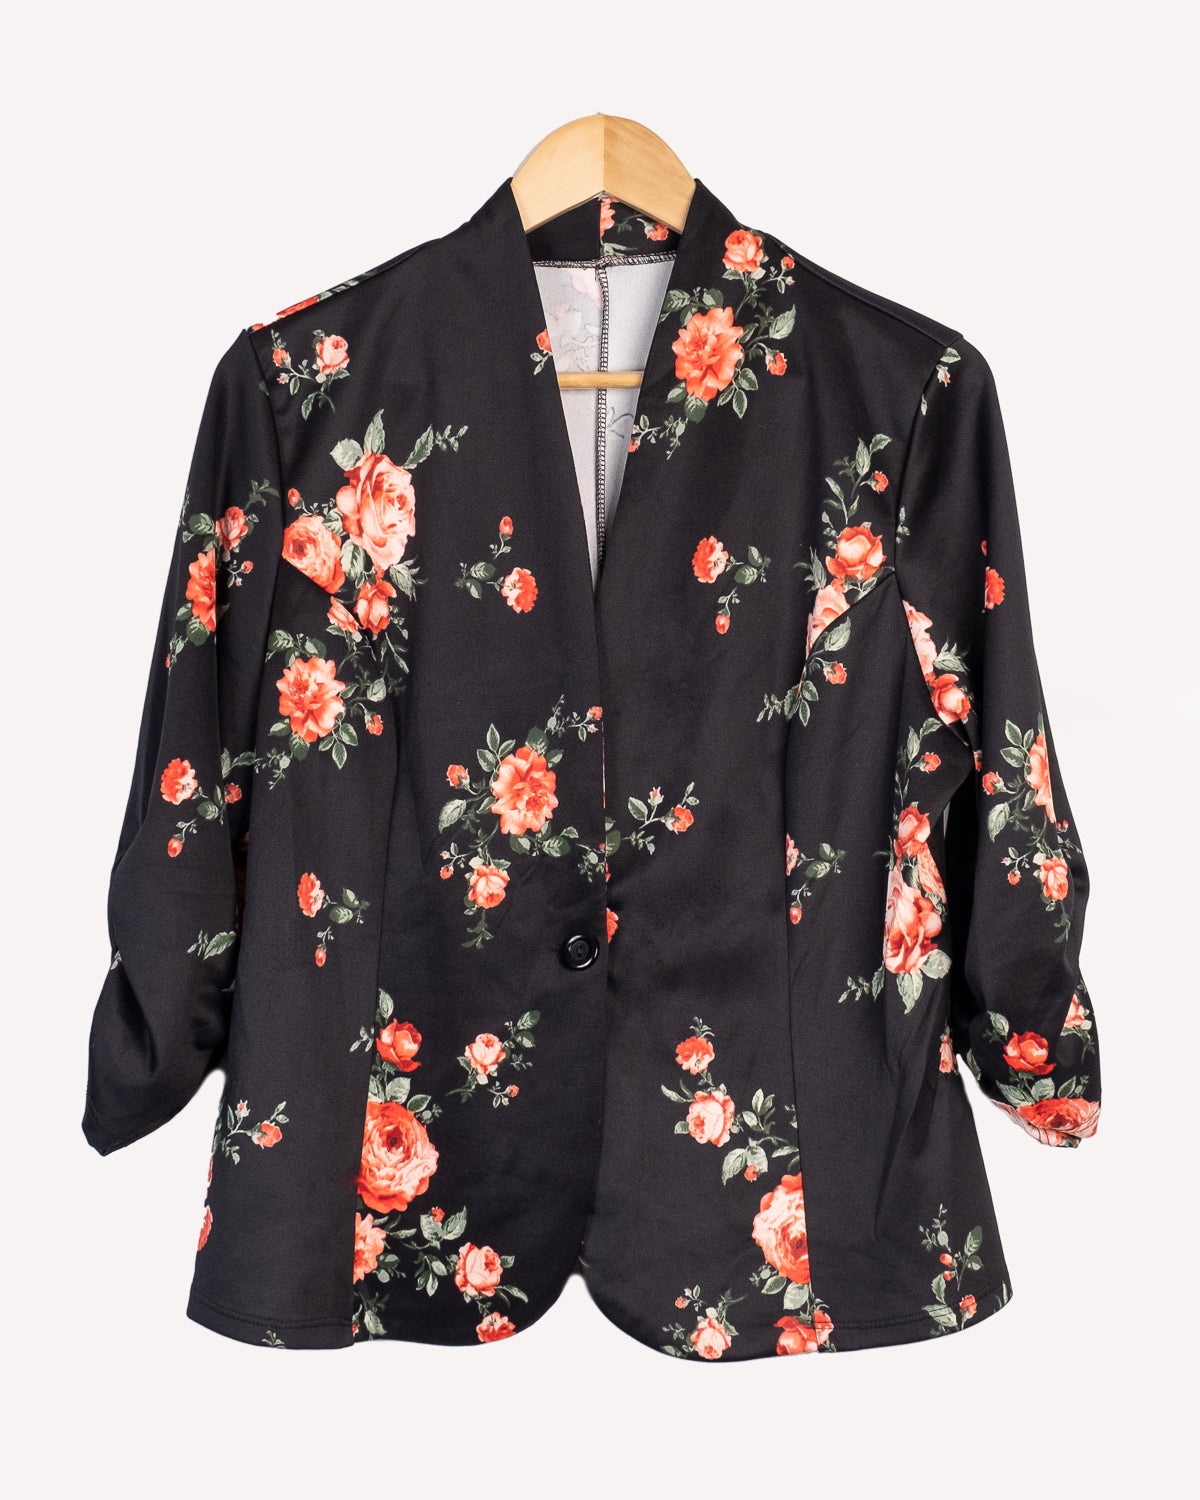 Women's 3/4 sleeve floral print ruched blazer jacket.